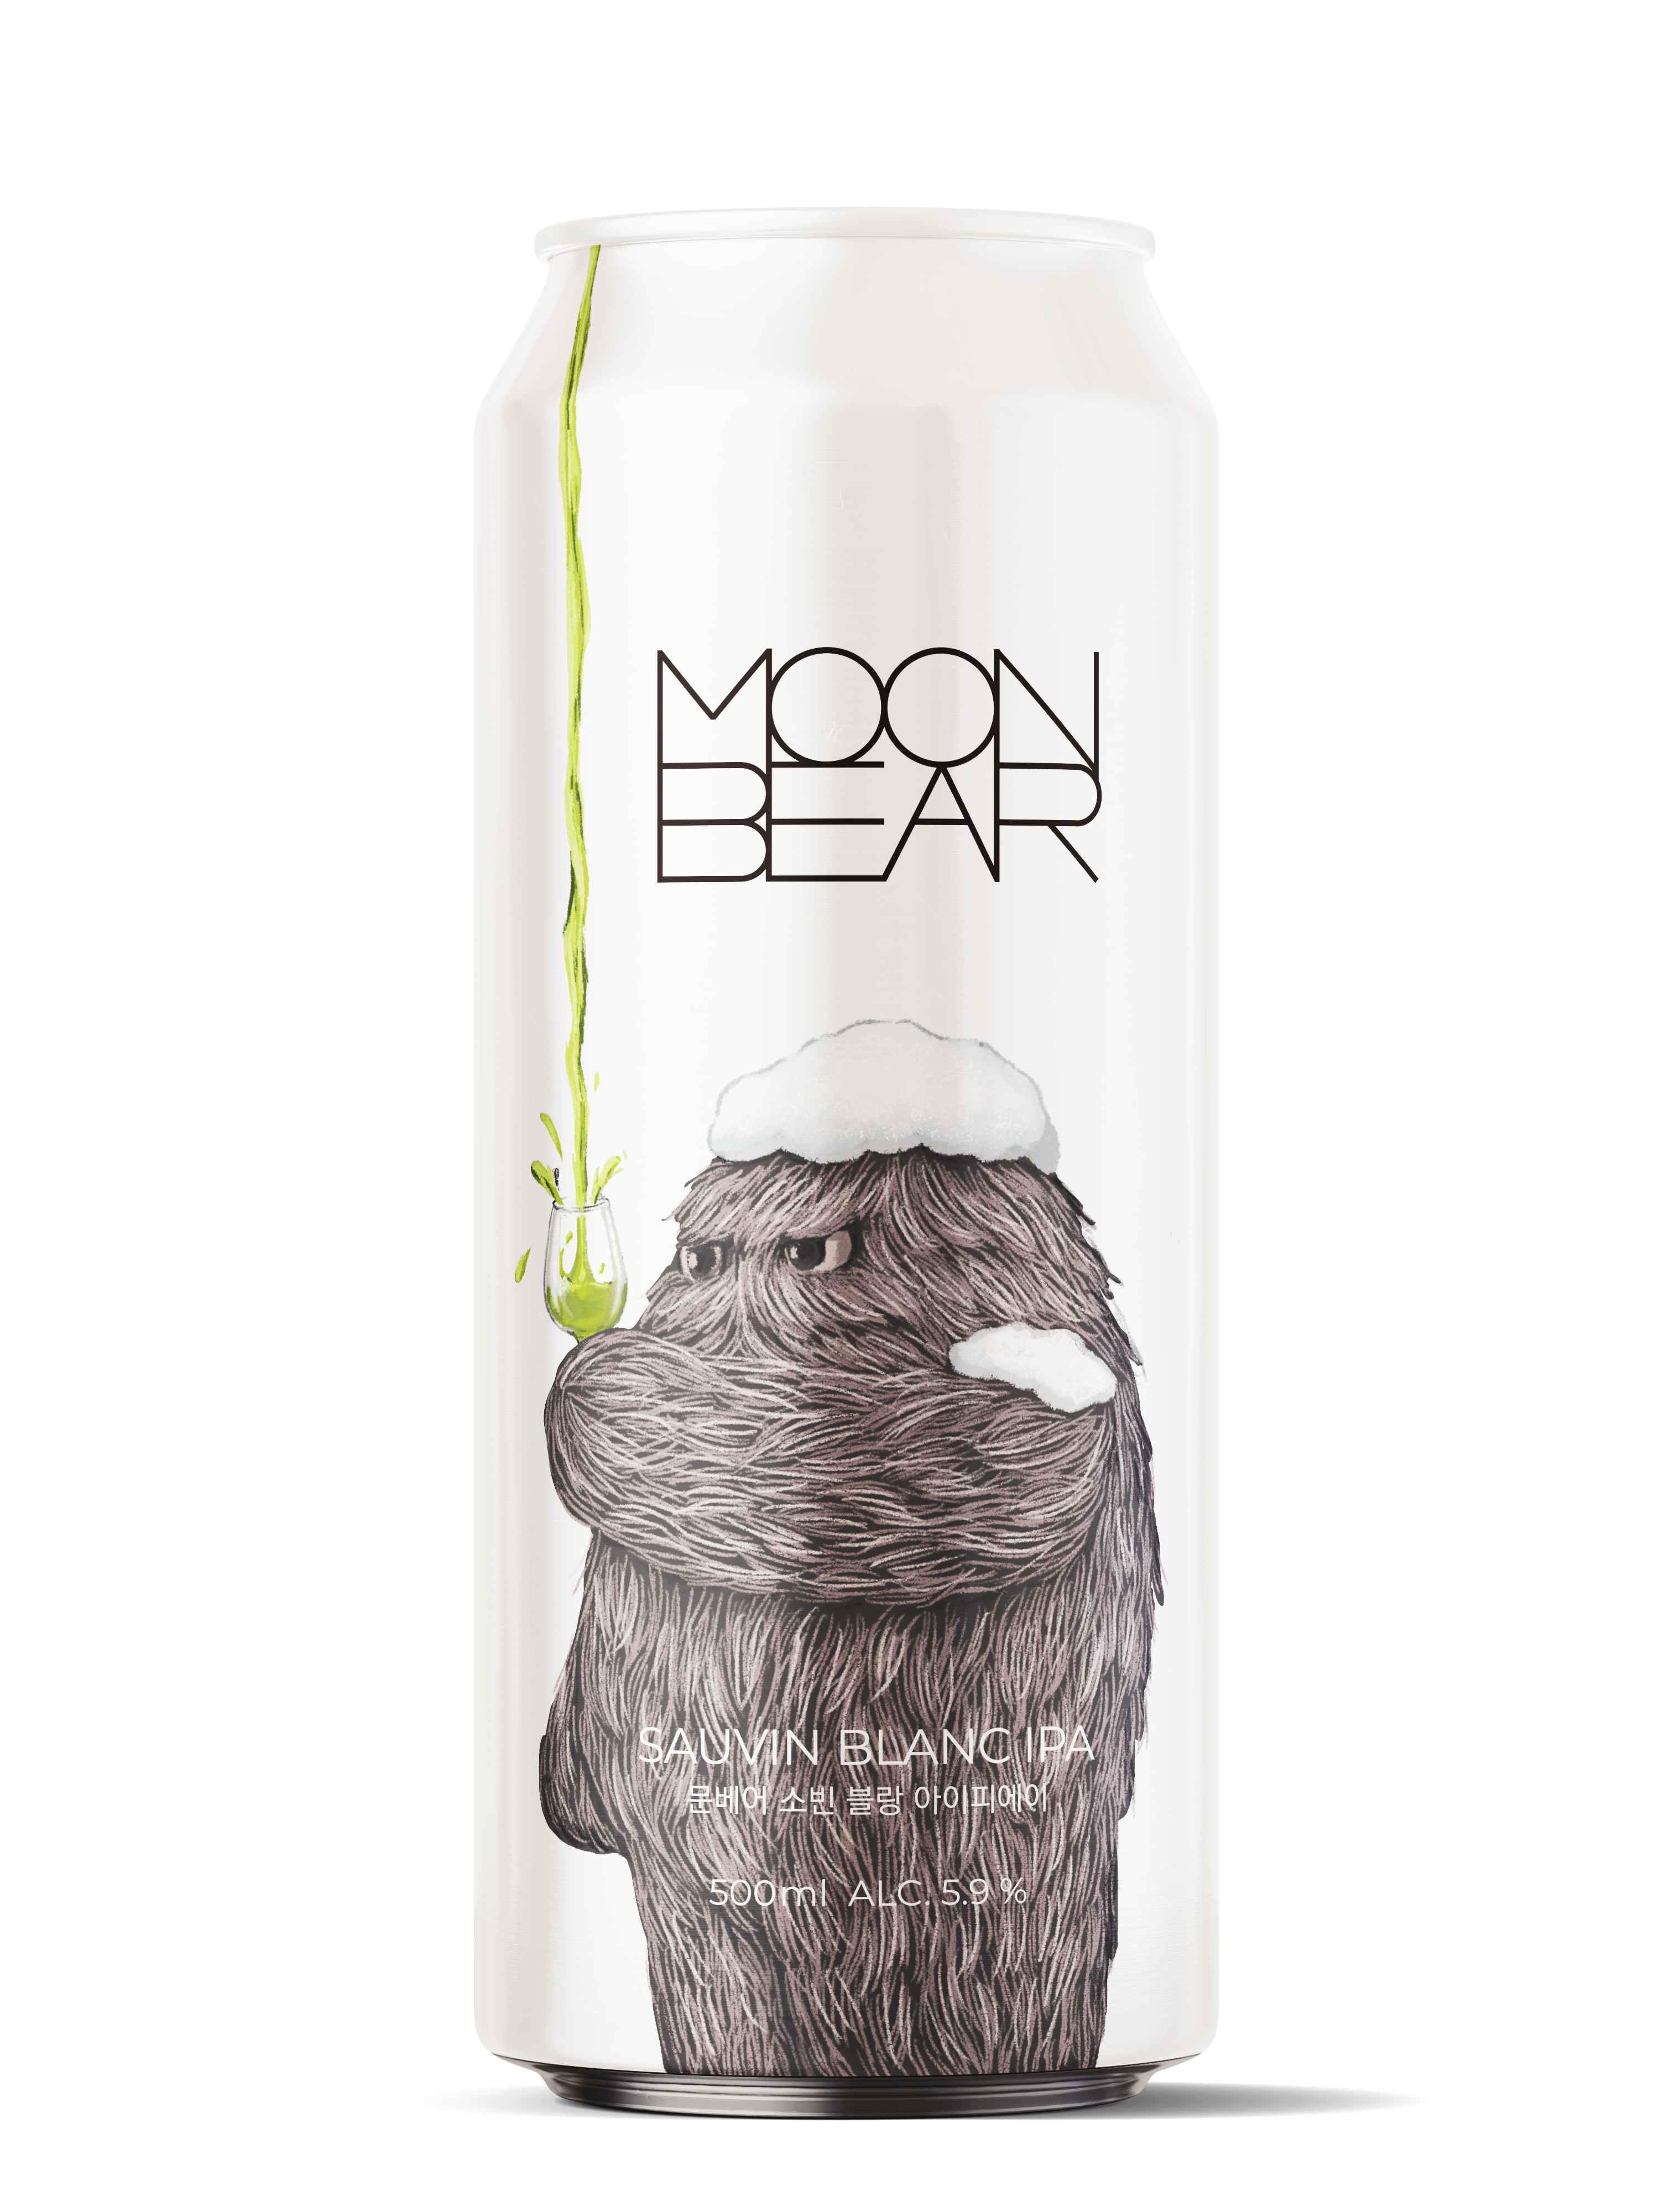 Moon Bear Sauvin Blanc IPA